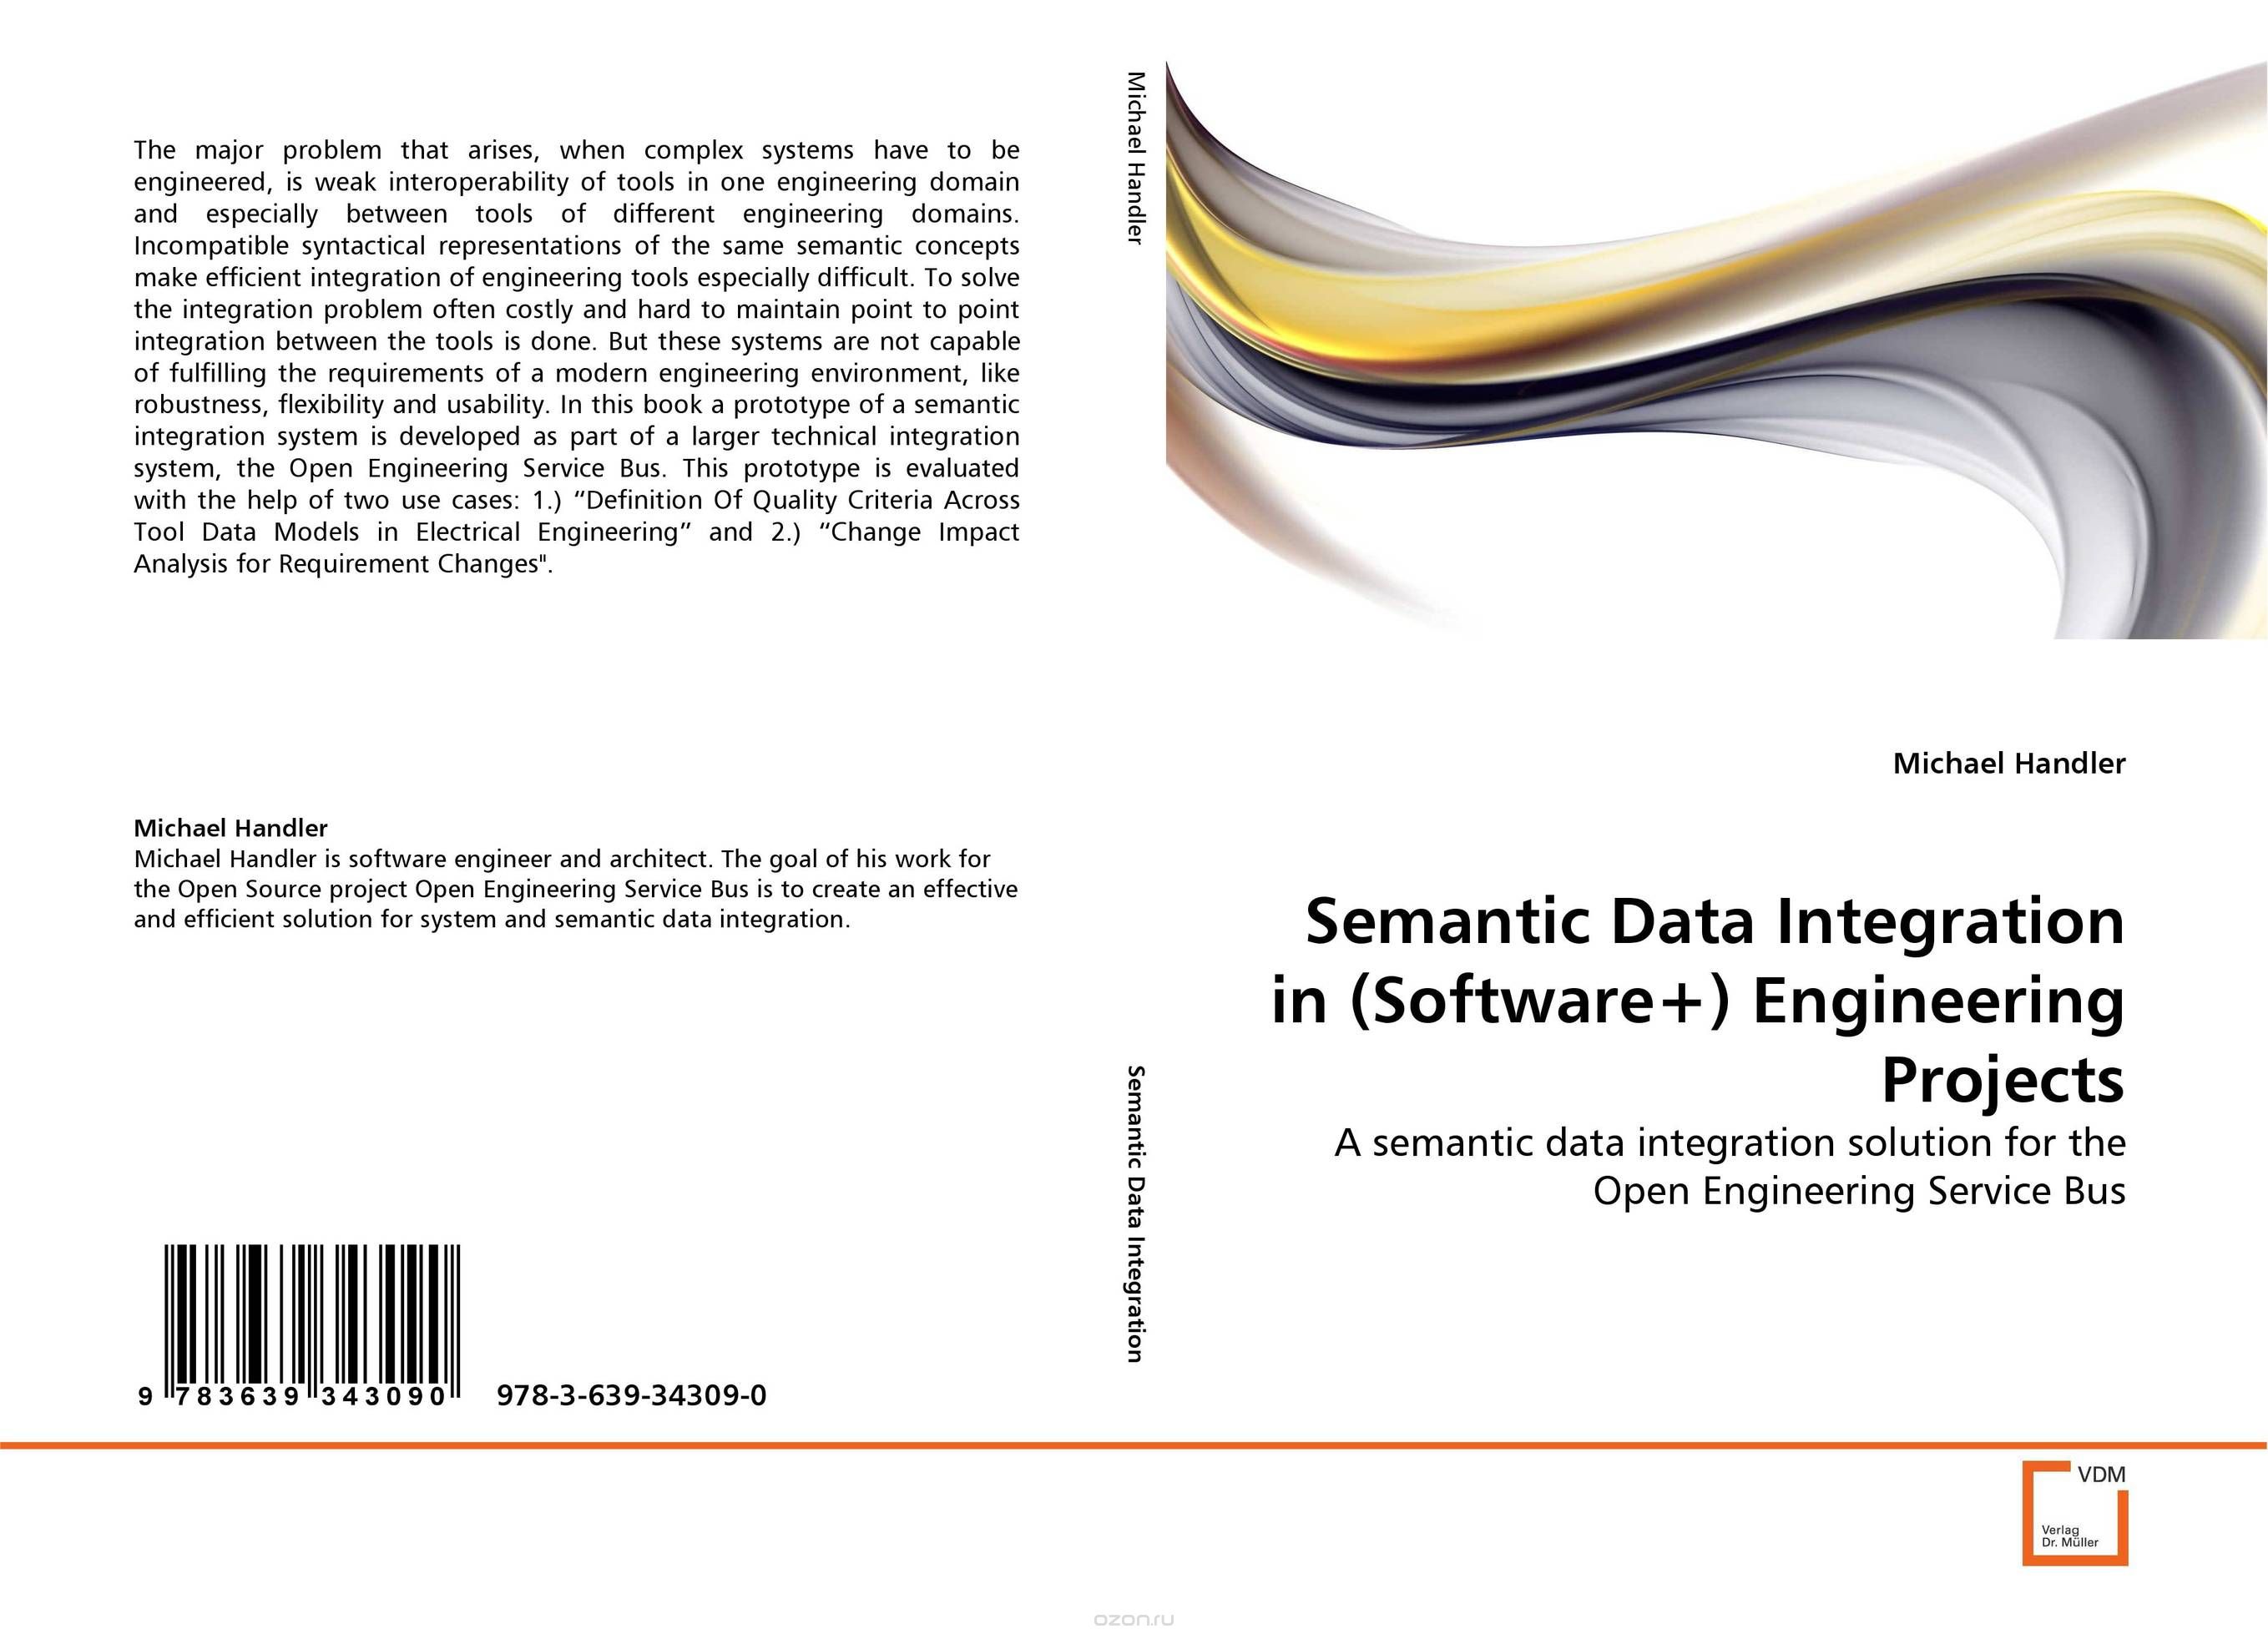 Скачать книгу "Semantic Data Integration in (Software+) Engineering Projects"